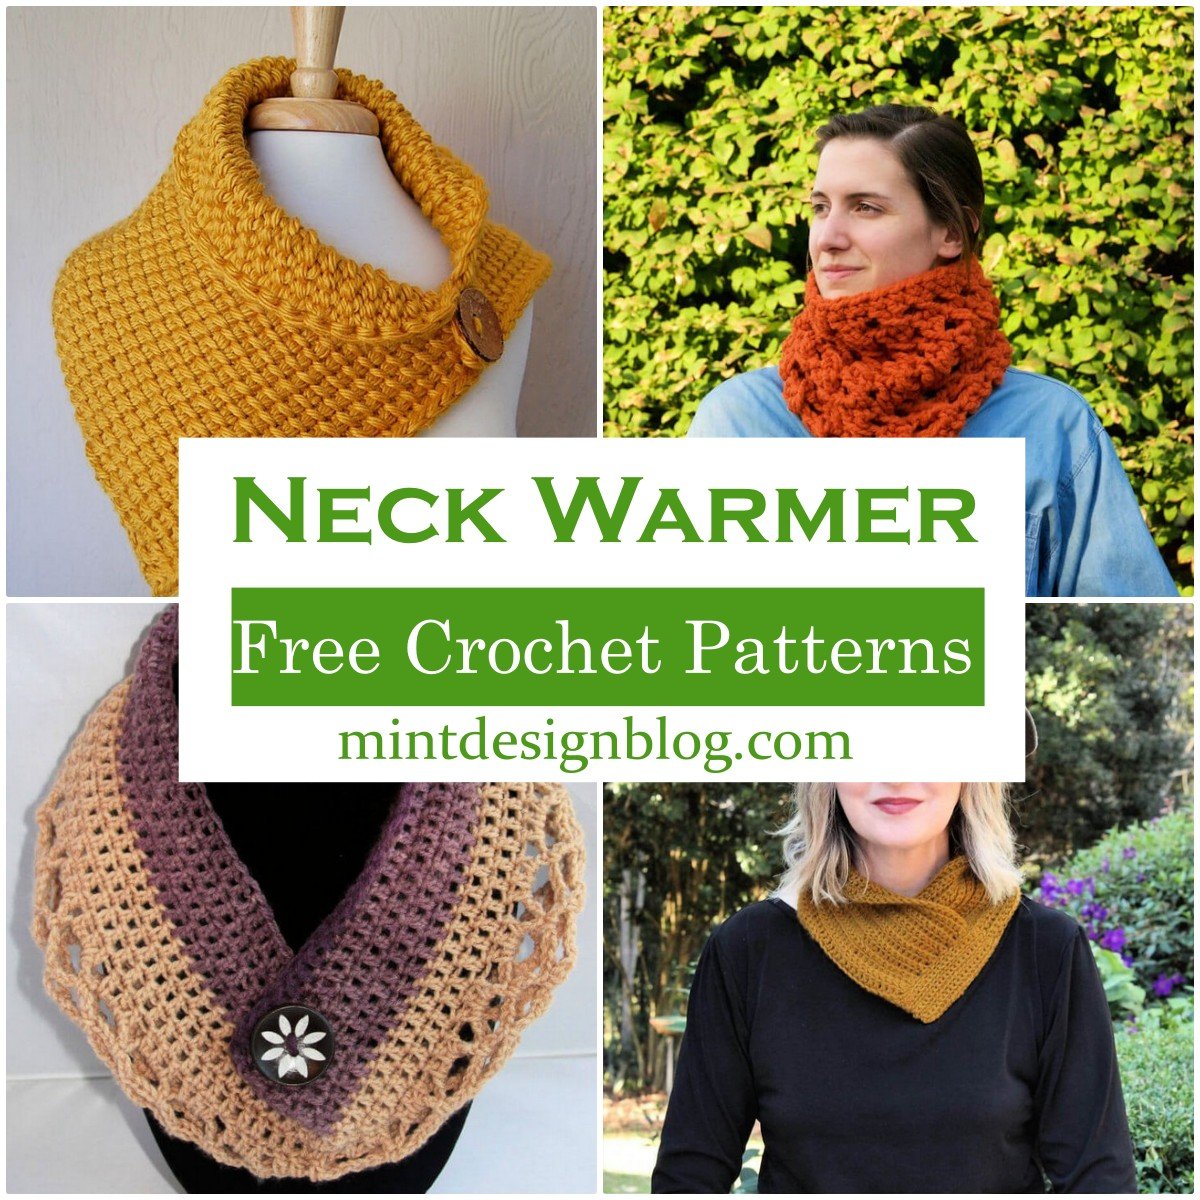 31 Free Crochet Neck Warmer Patterns - Mint Design Blog